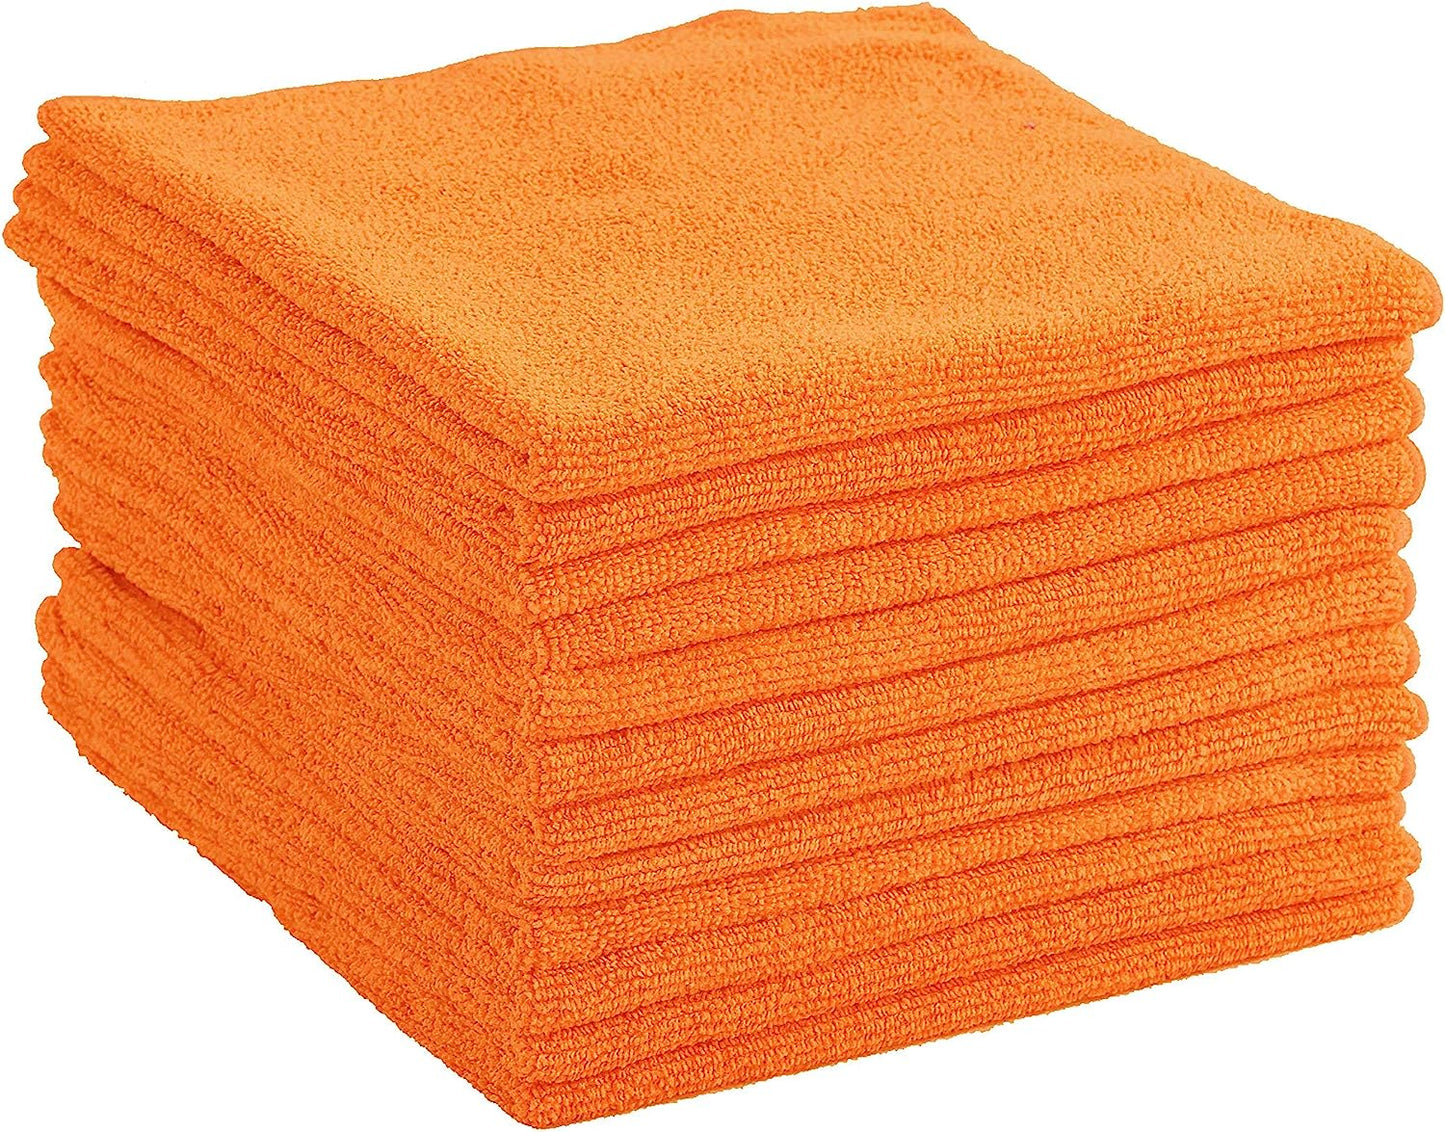 Reusable Kitchen Unpaper Towels Set Solid Colors